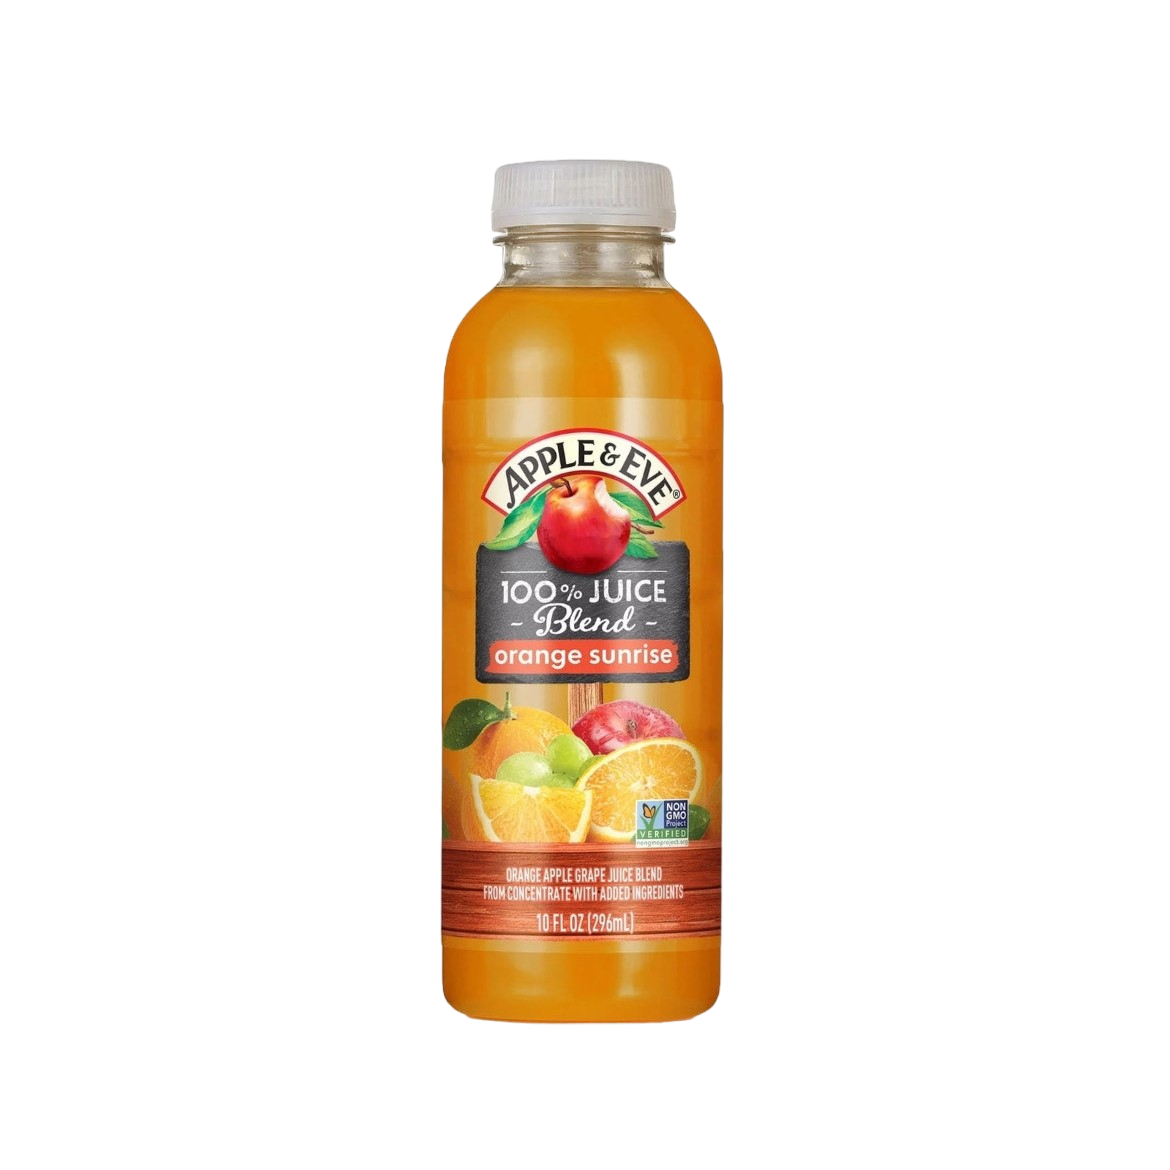 Apple & Eve 100% Juice Orange Sunrise (181332-4)